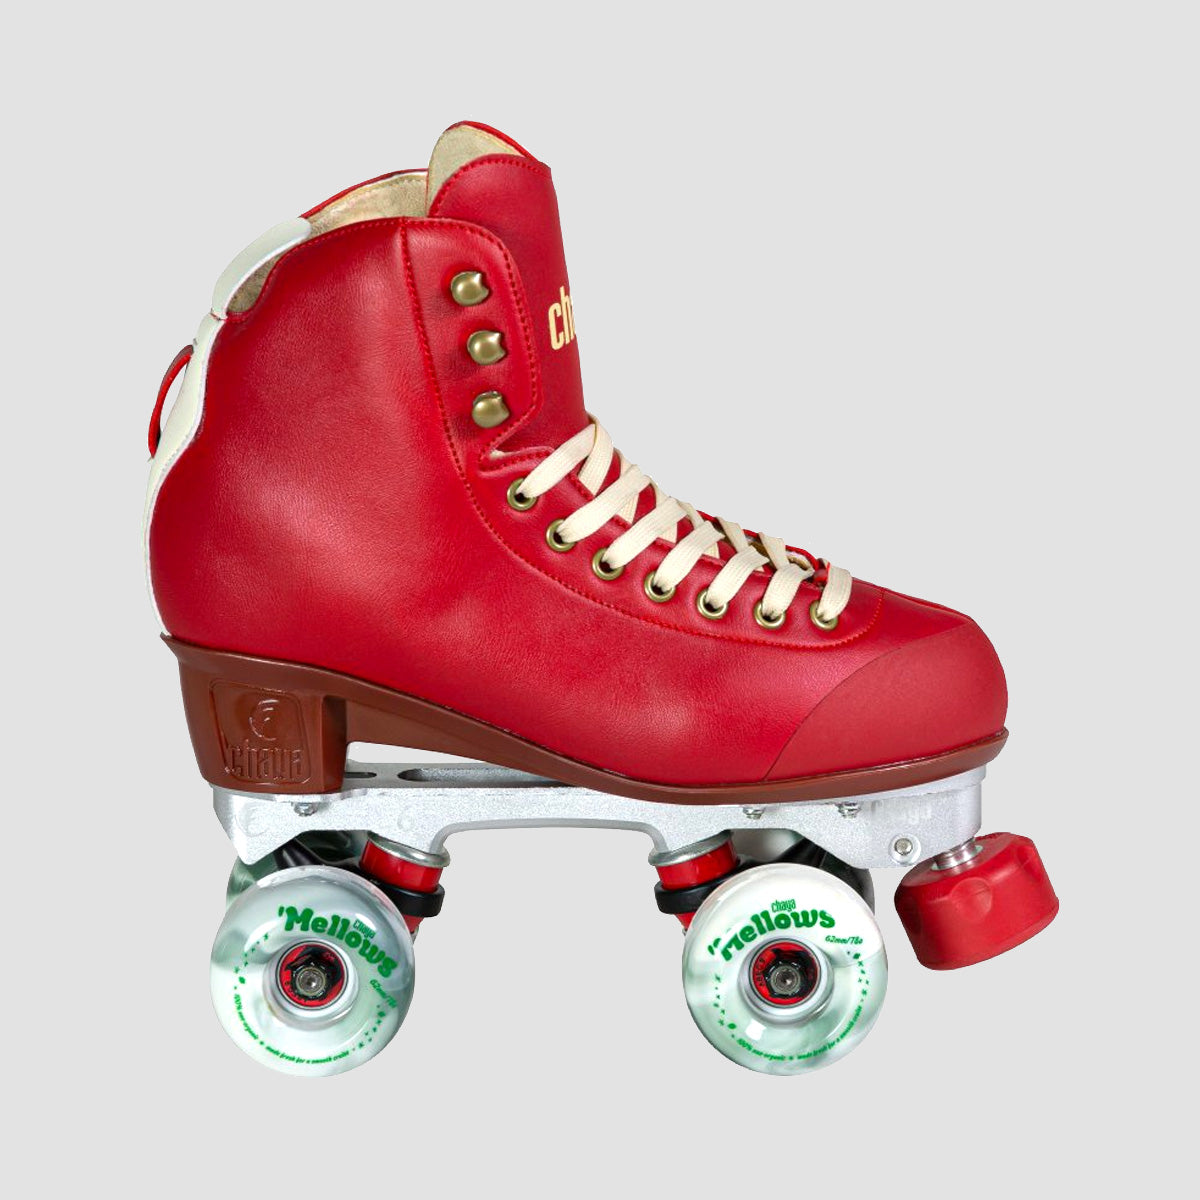 Chaya Lifestyle Melrose Premium Quad Skates Berry Red